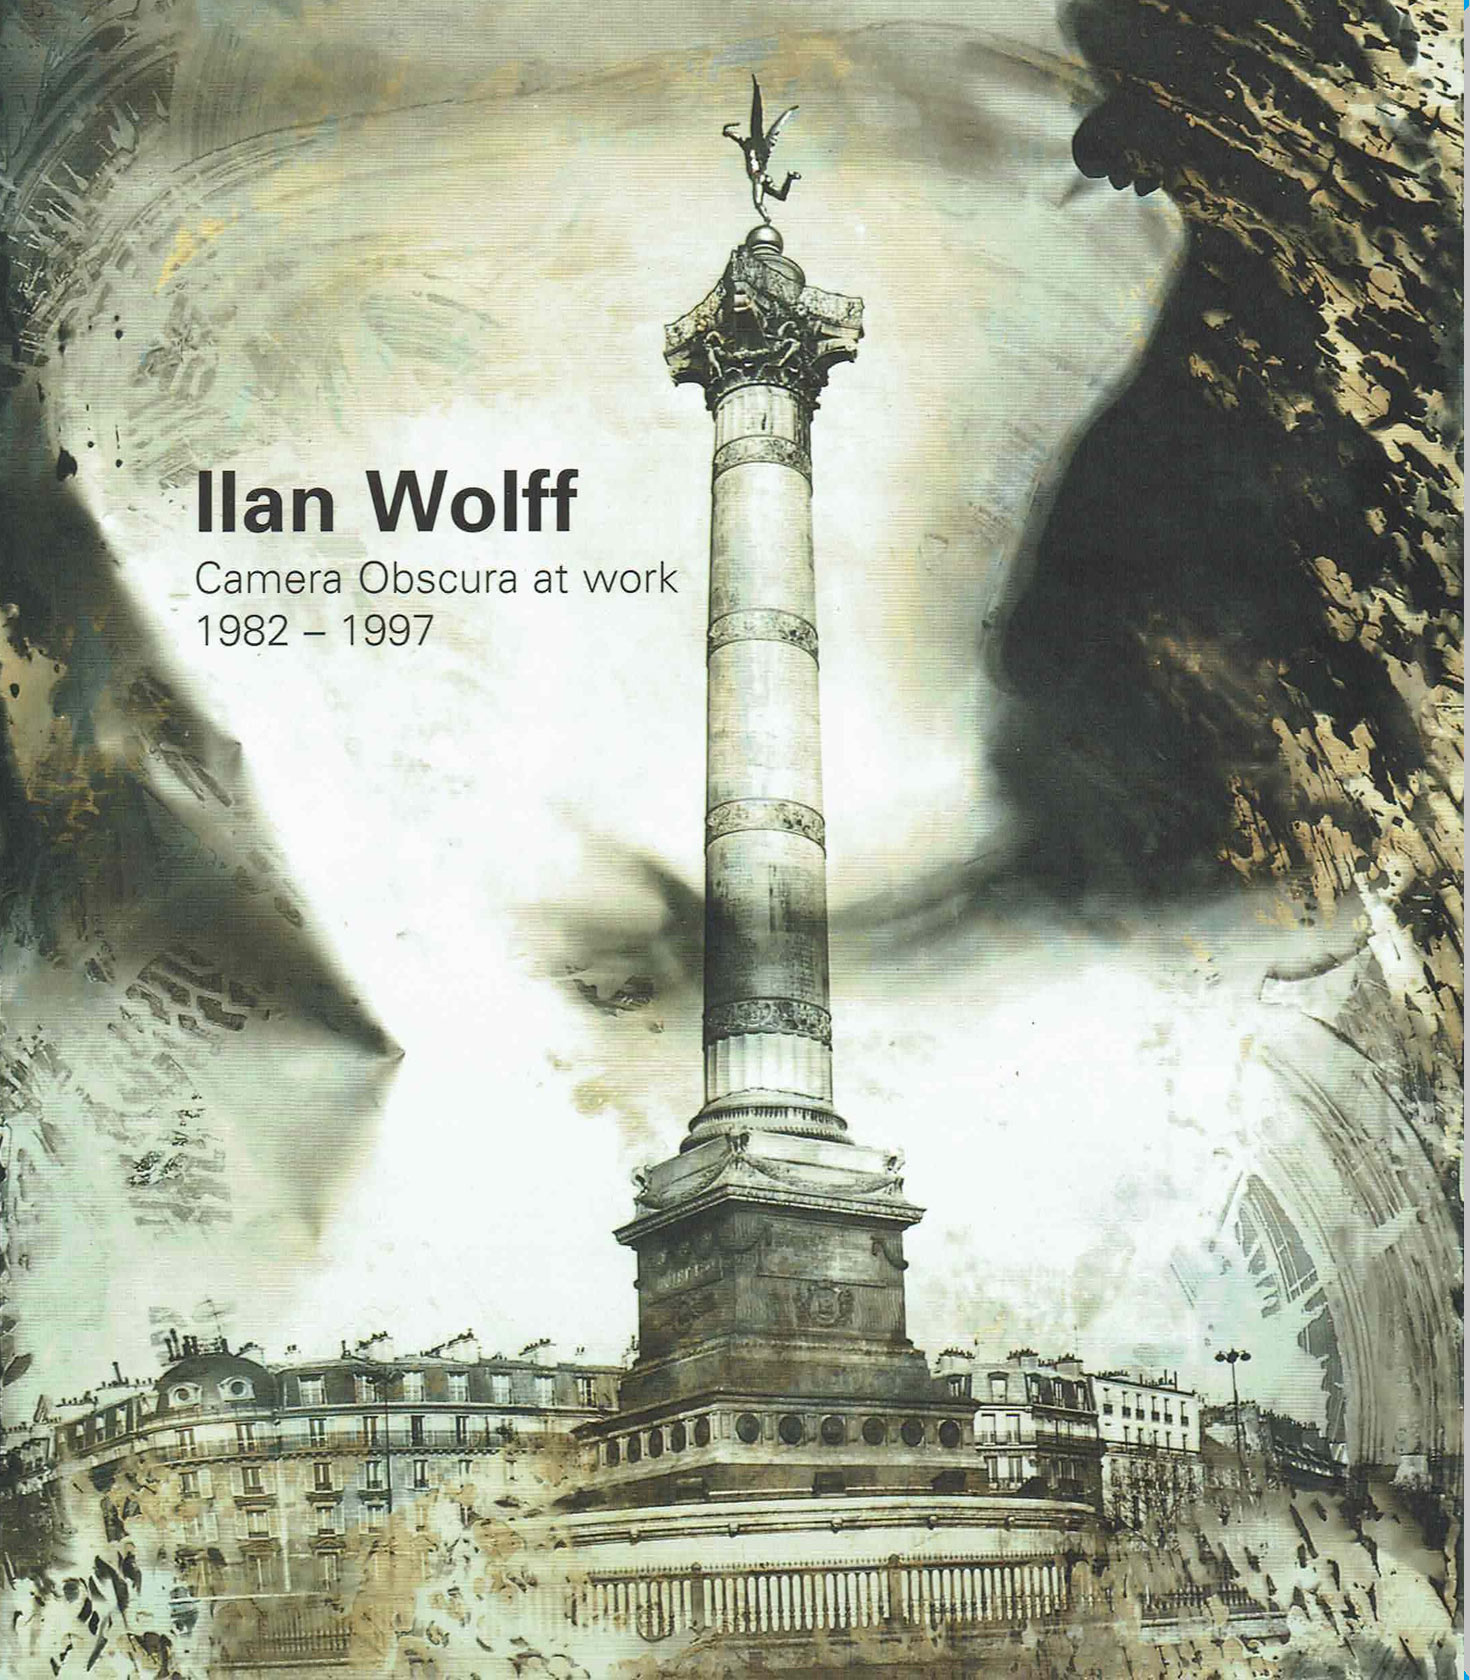 Titelbild des Katalogs: „Ilan Wolff. Camera Obscura at work 1982-1997“. Abbild des Stenogramms „Place de la Bastille“, Paris 1997. Foto: Ilan Wolff.